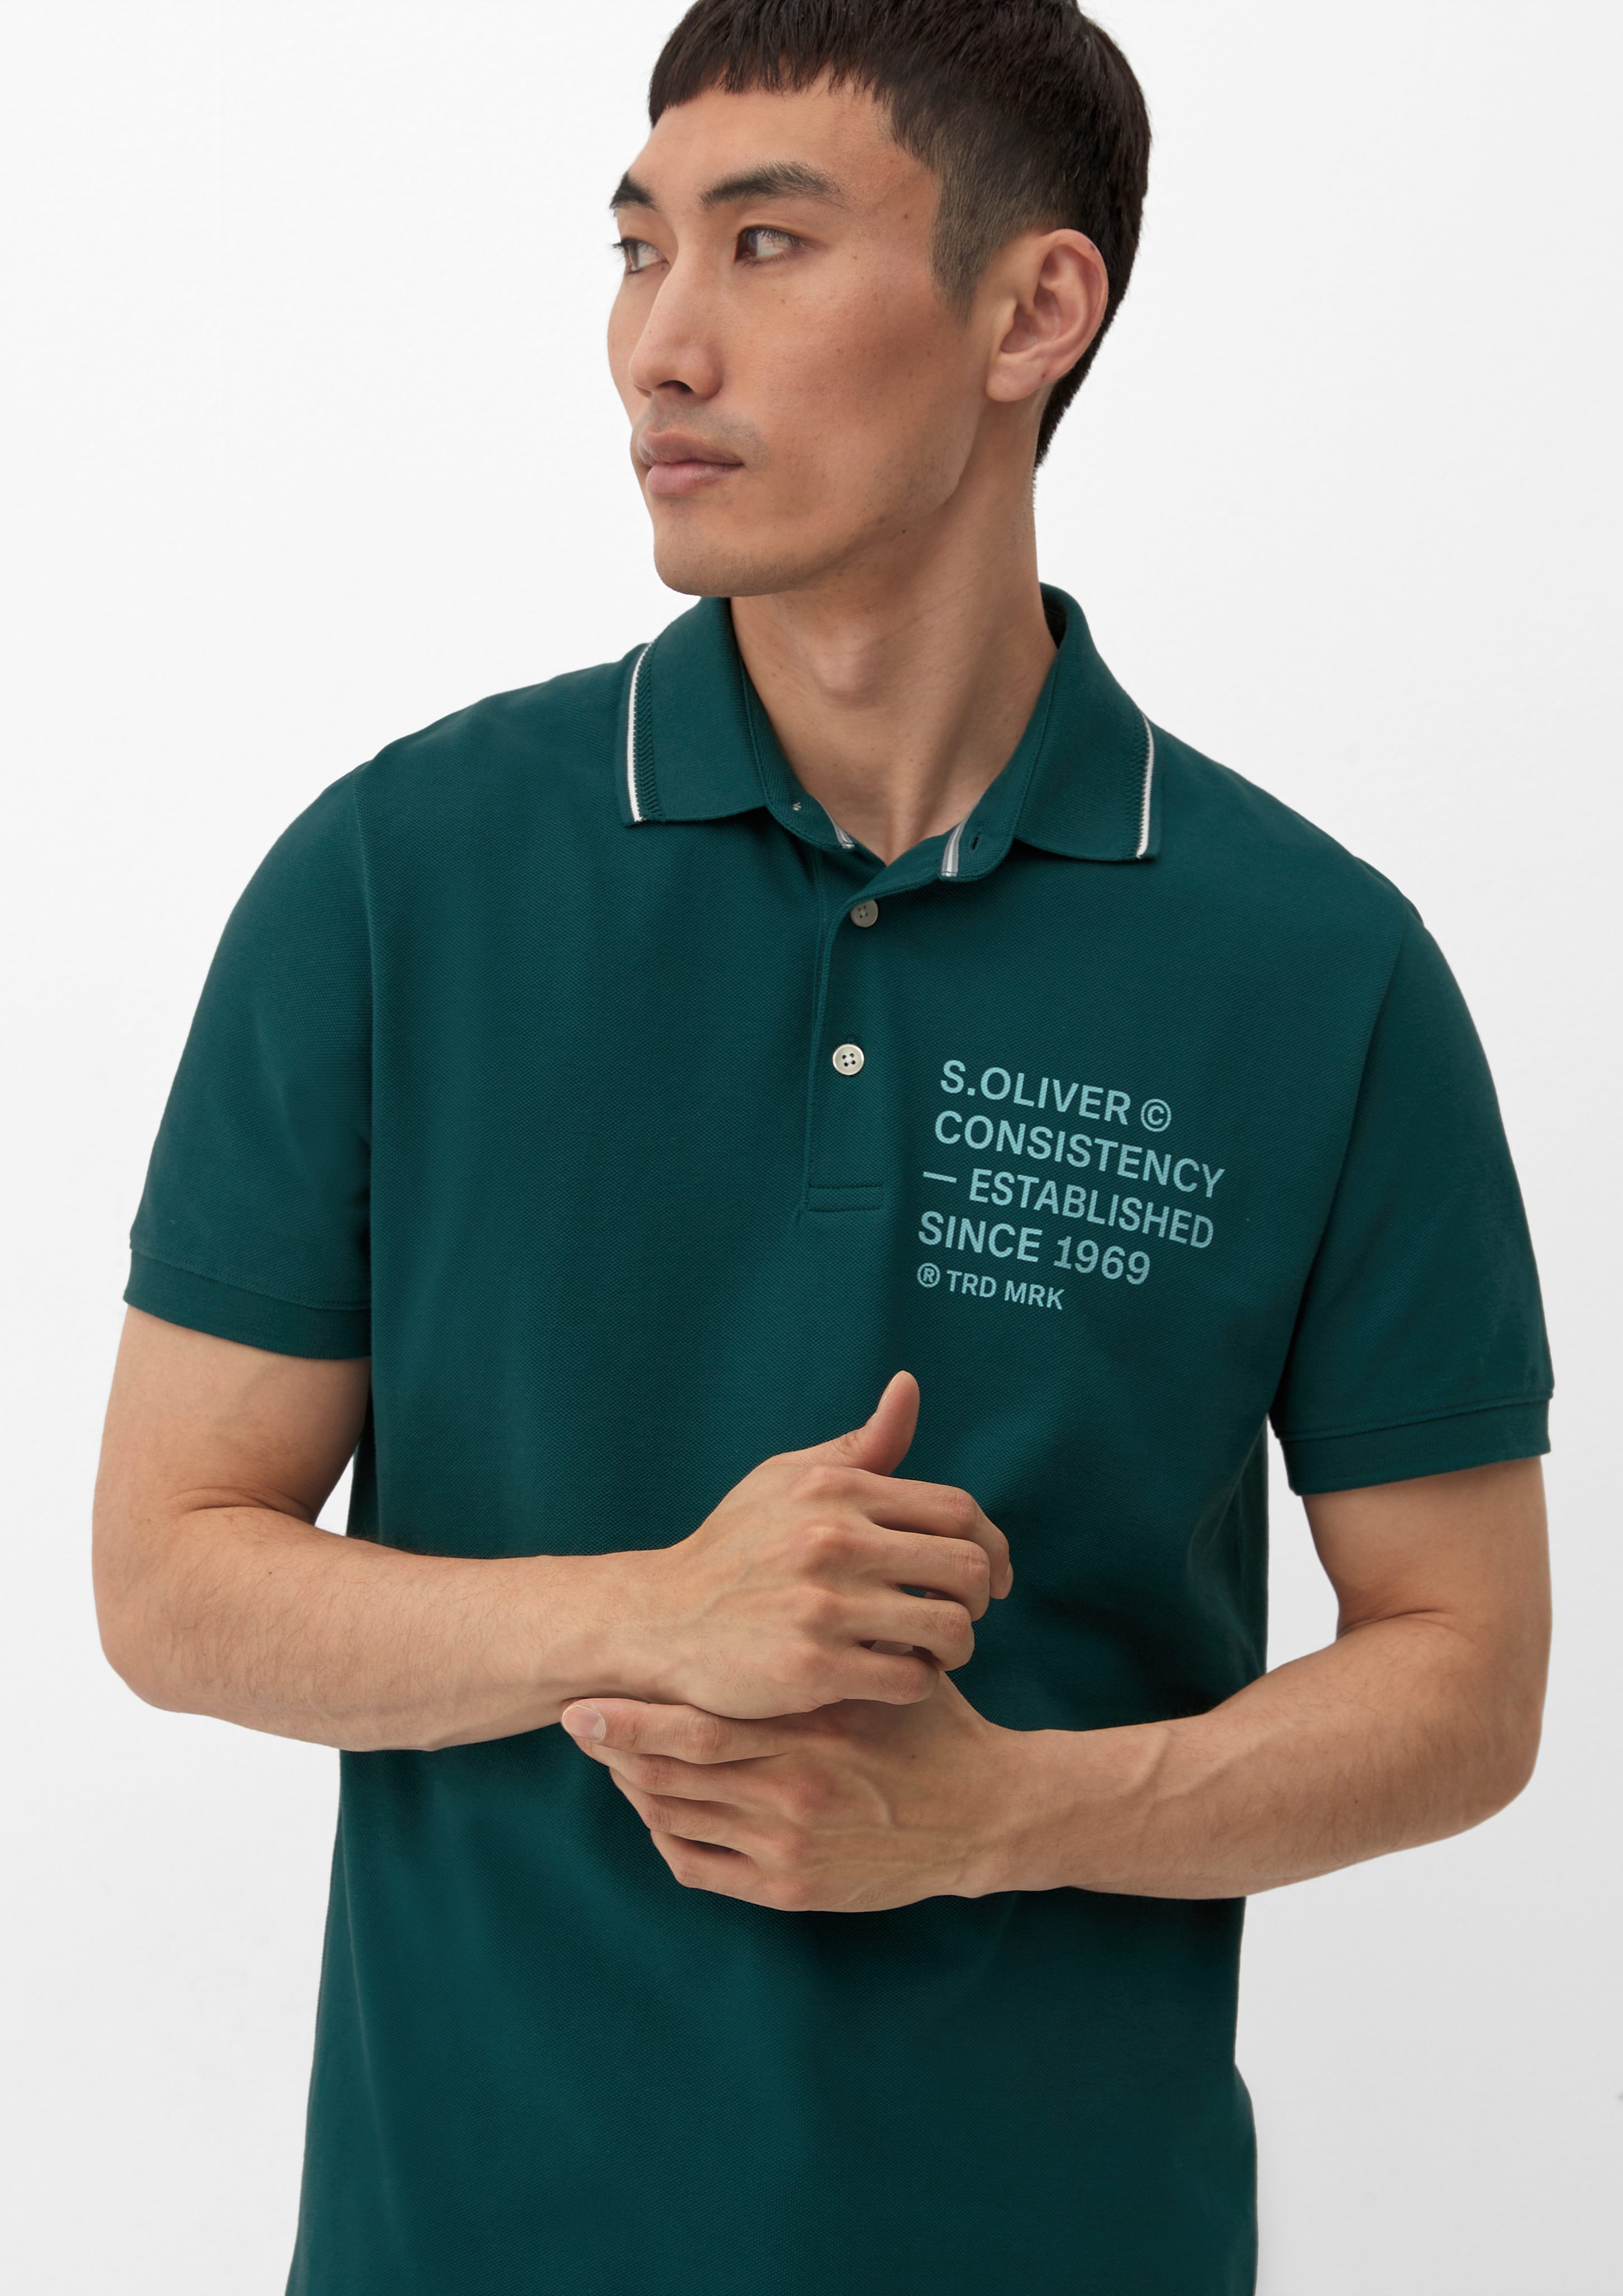 s.Oliver Kurzarmshirt Poloshirt mit Piquéstruktur Artwork, Blende tannengrün